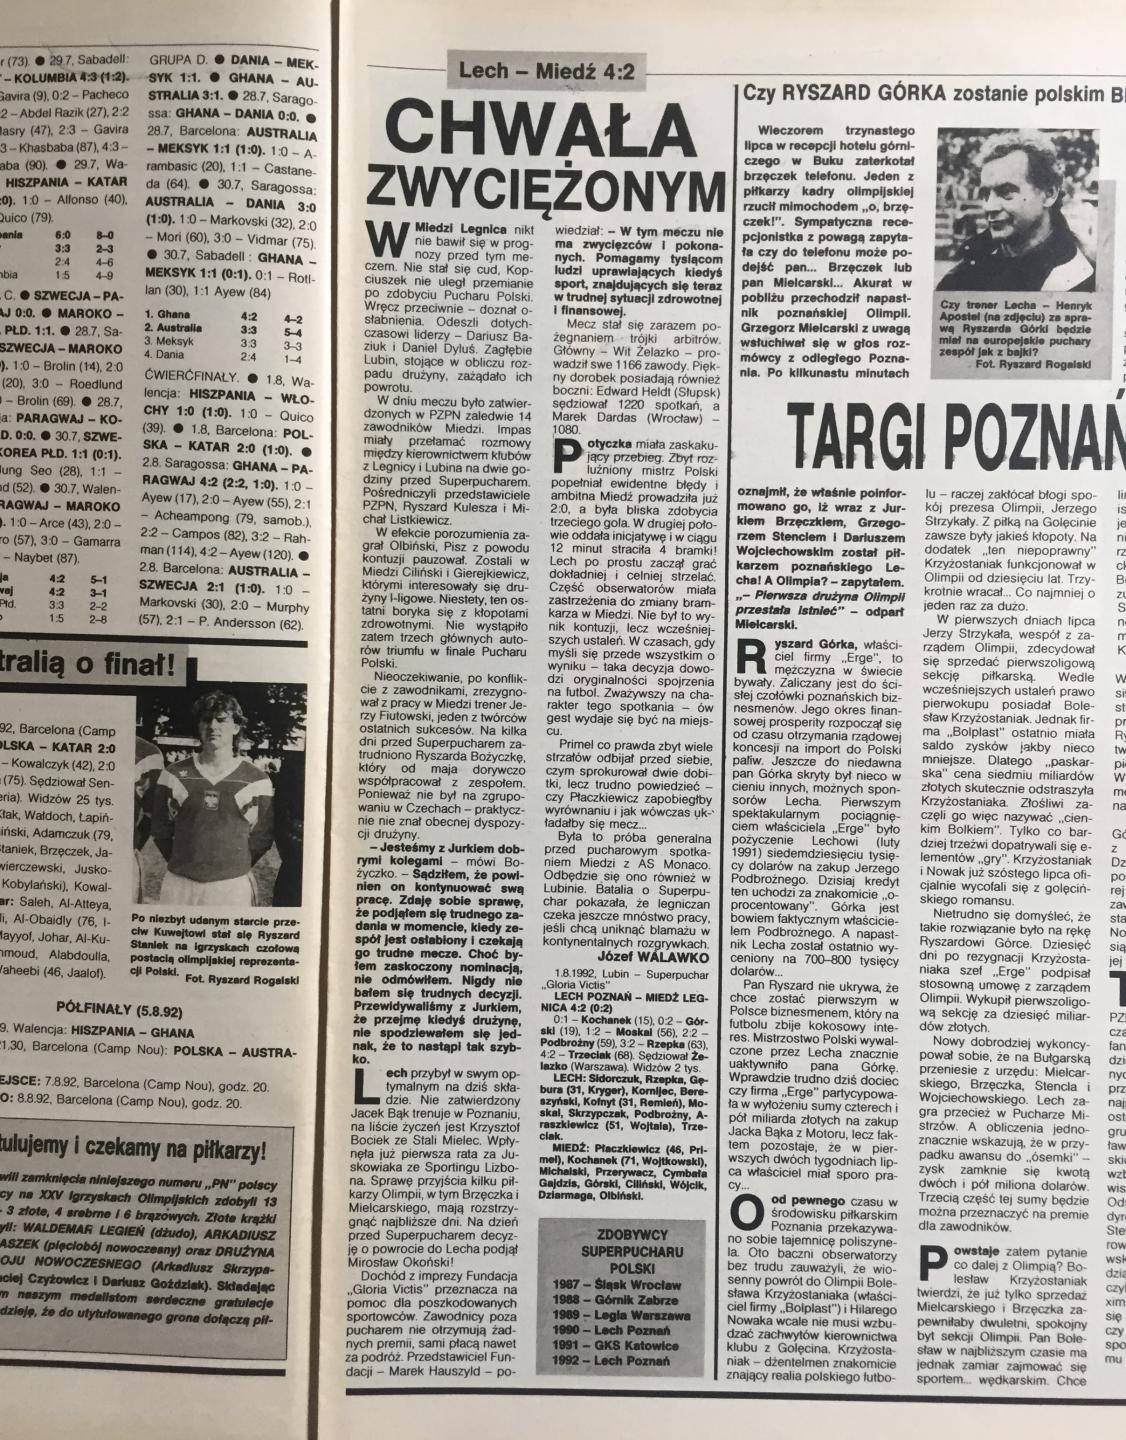 Piłka Nożna po Lech Poznań - Miedź Legnica 4:2 (01.08.1992)